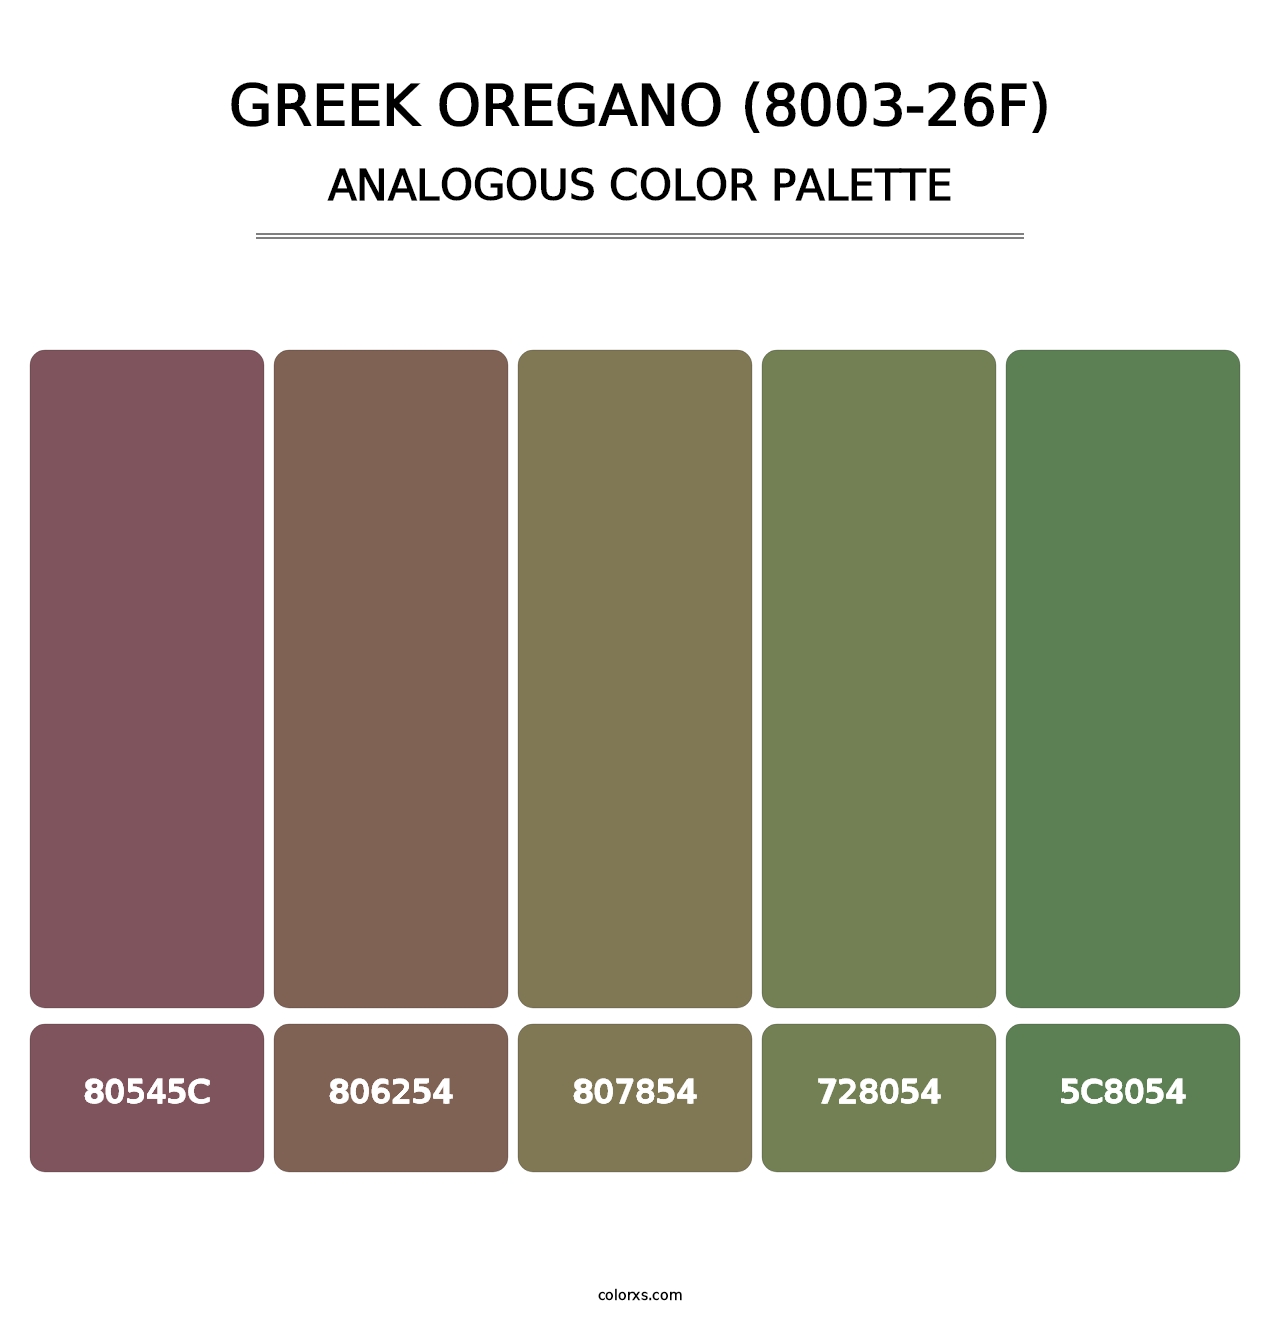 Greek Oregano (8003-26F) - Analogous Color Palette